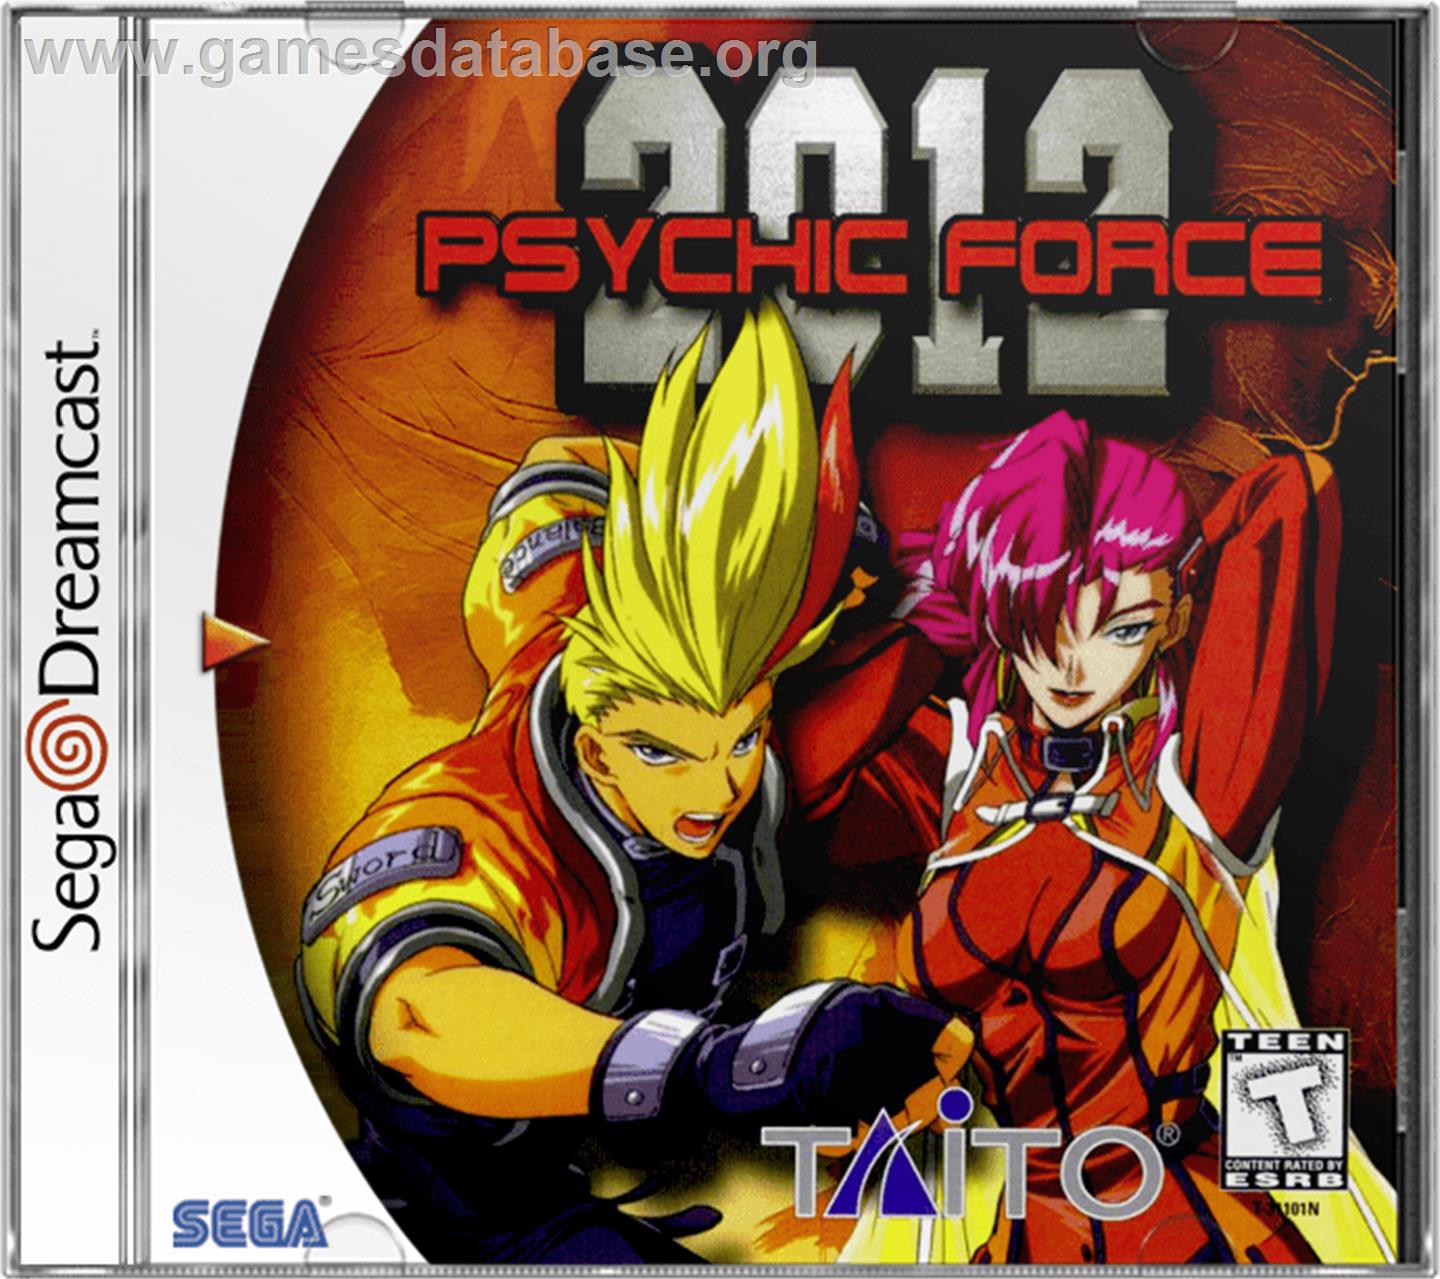 Psychic Force 2012 - Sega Dreamcast - Artwork - Box